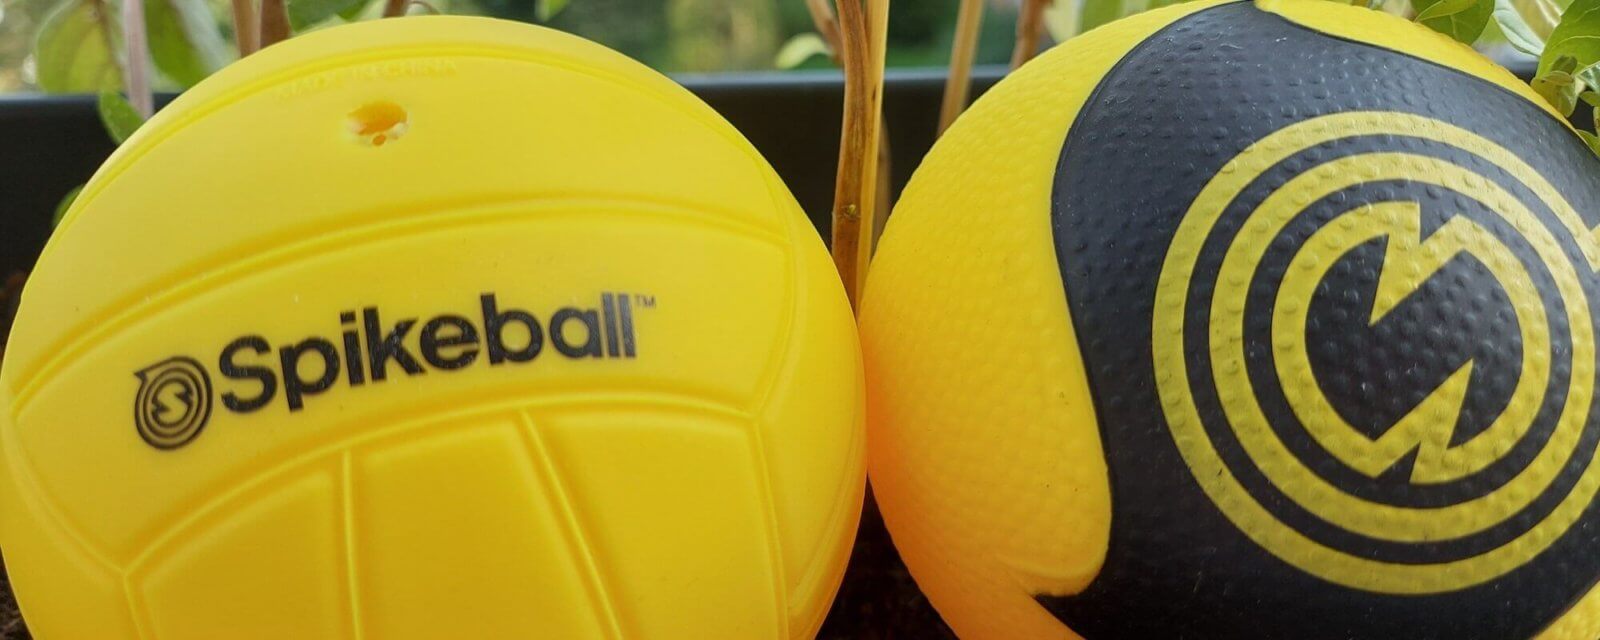 Normaler Ball VS PRO Spikeball Ball